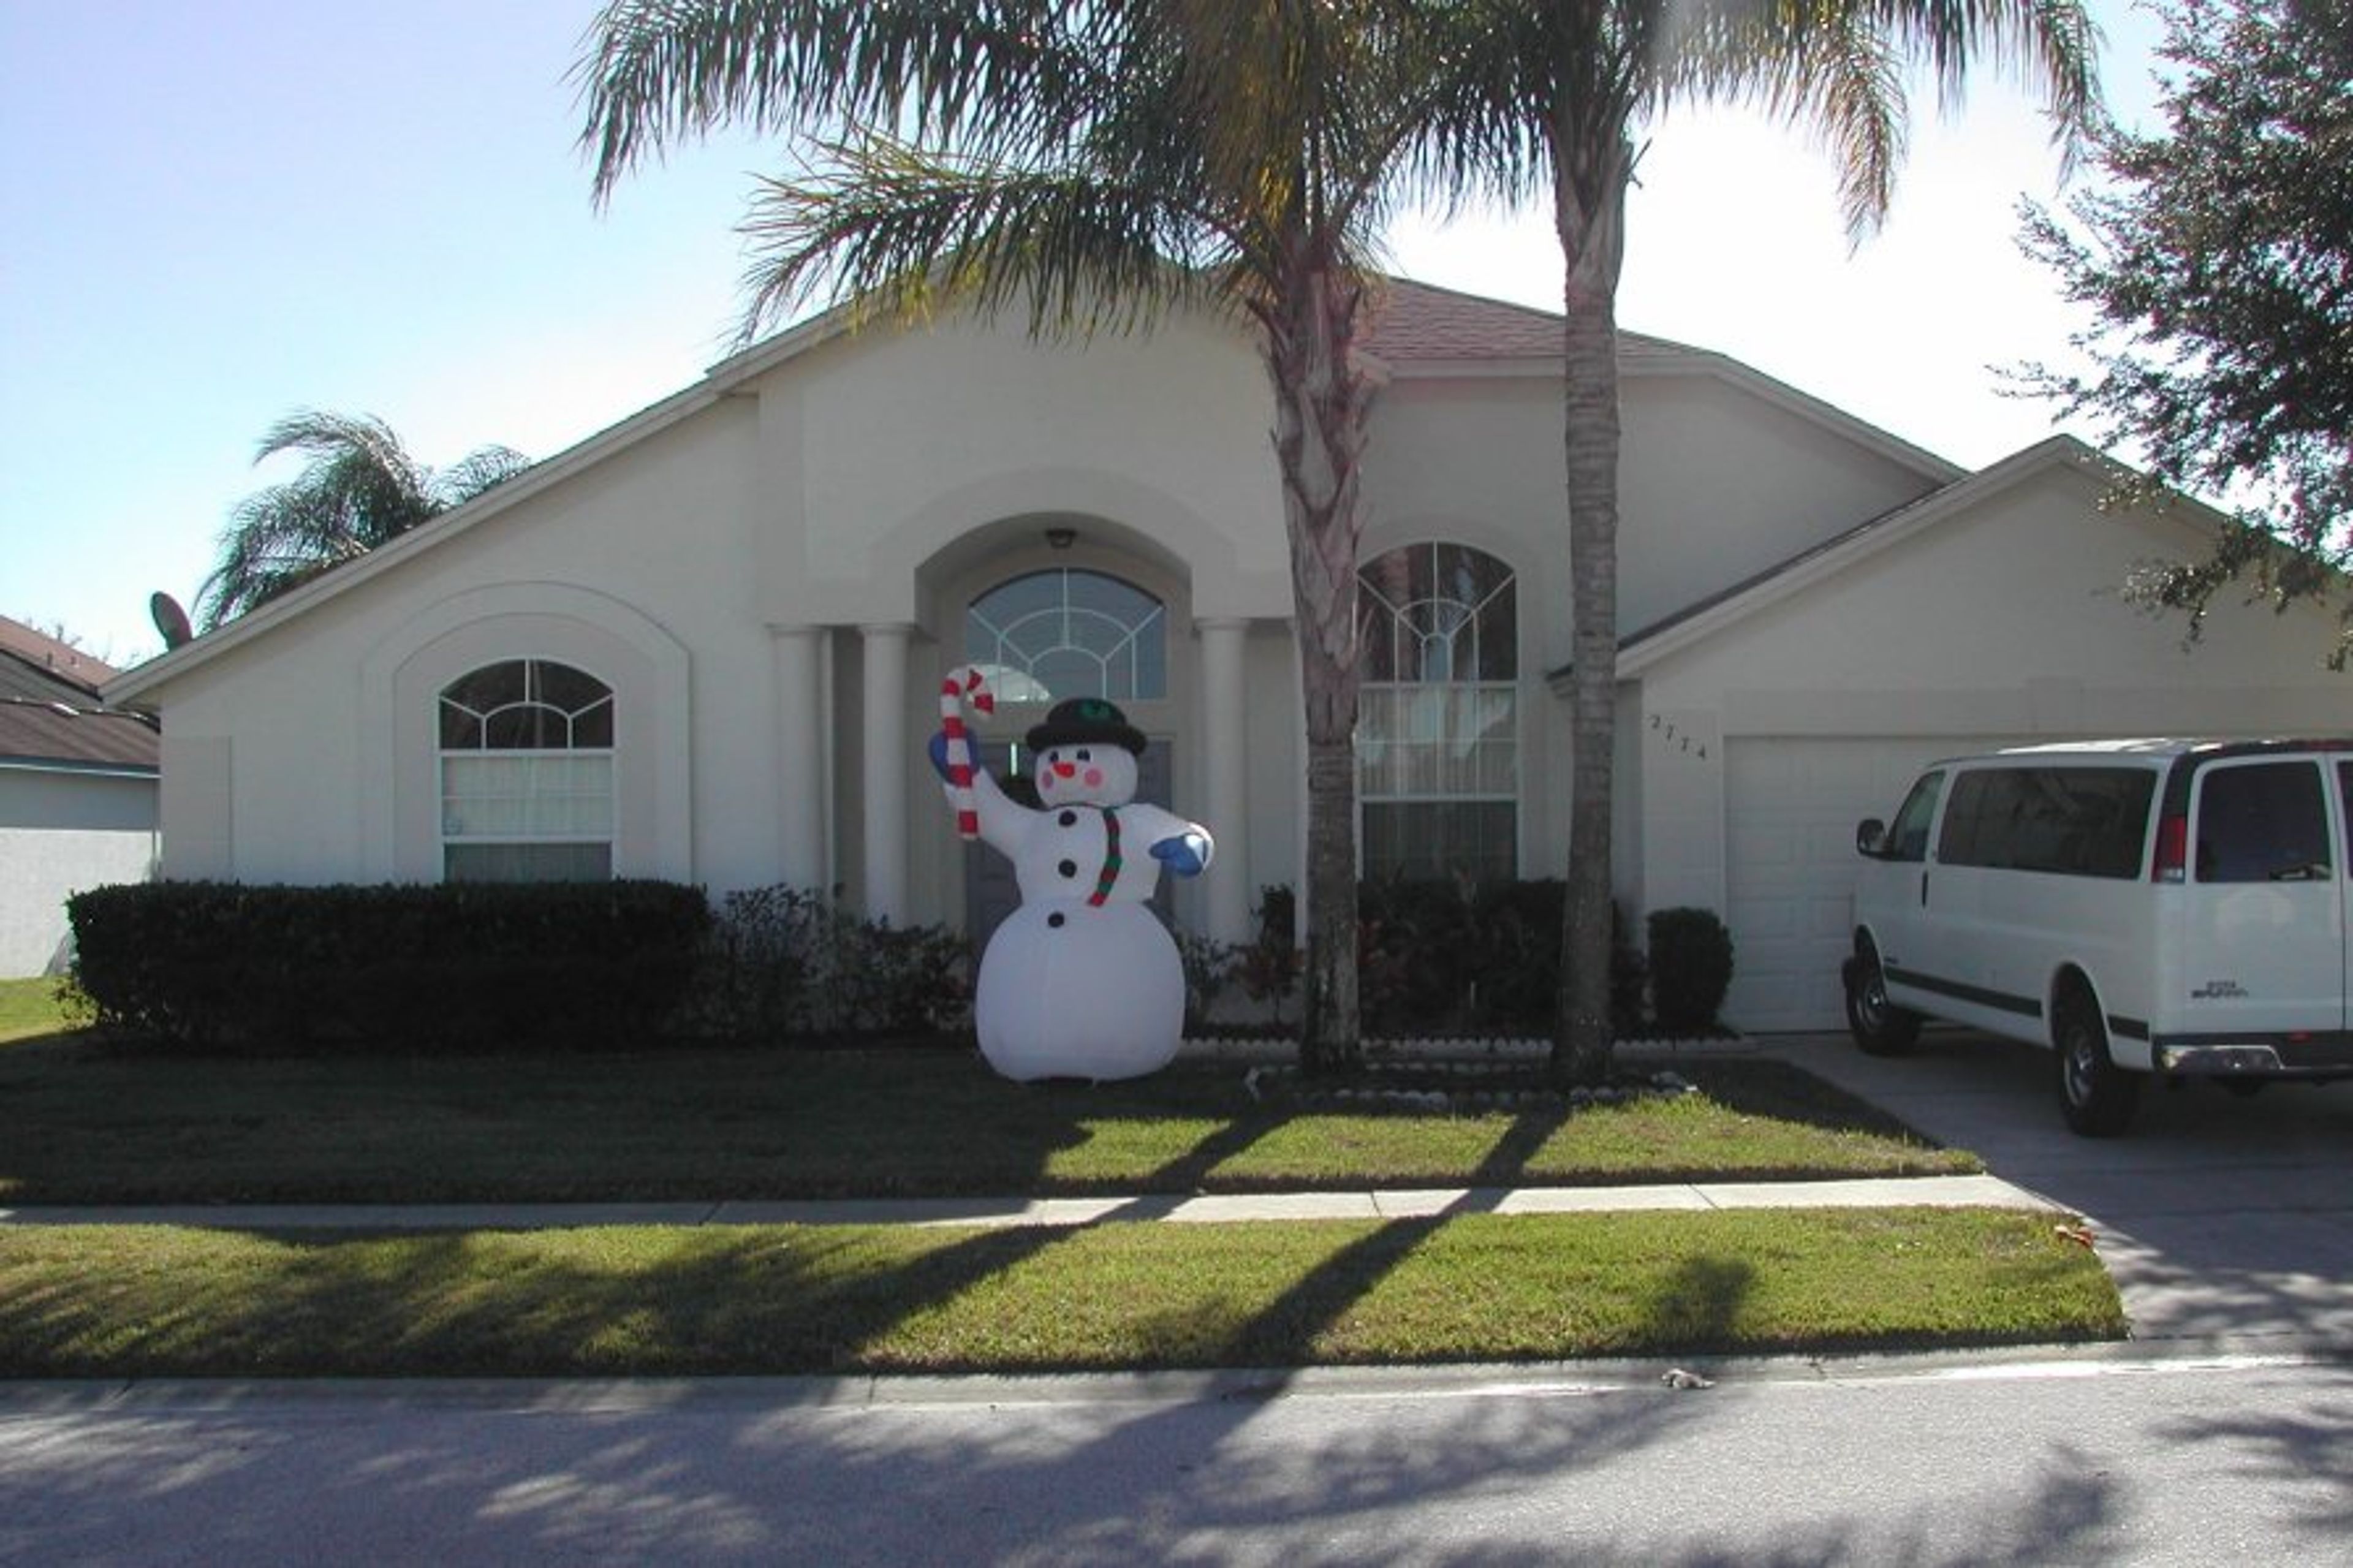 Florida snowman greeting at Christmas time